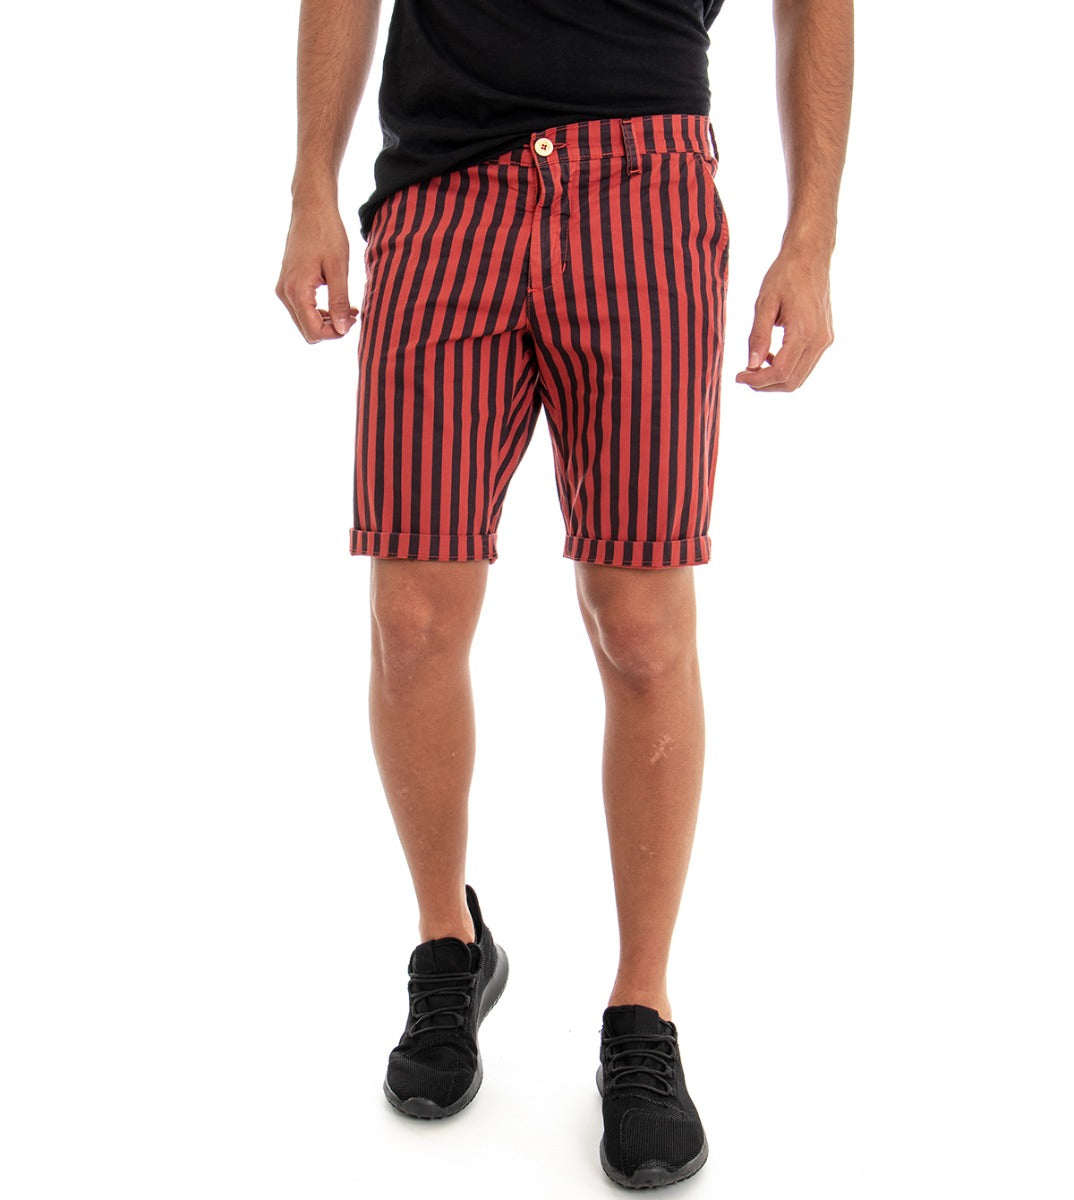 Short Men's Bermuda Shorts Red Two-Tone Striped GIOSAL-PC1422A